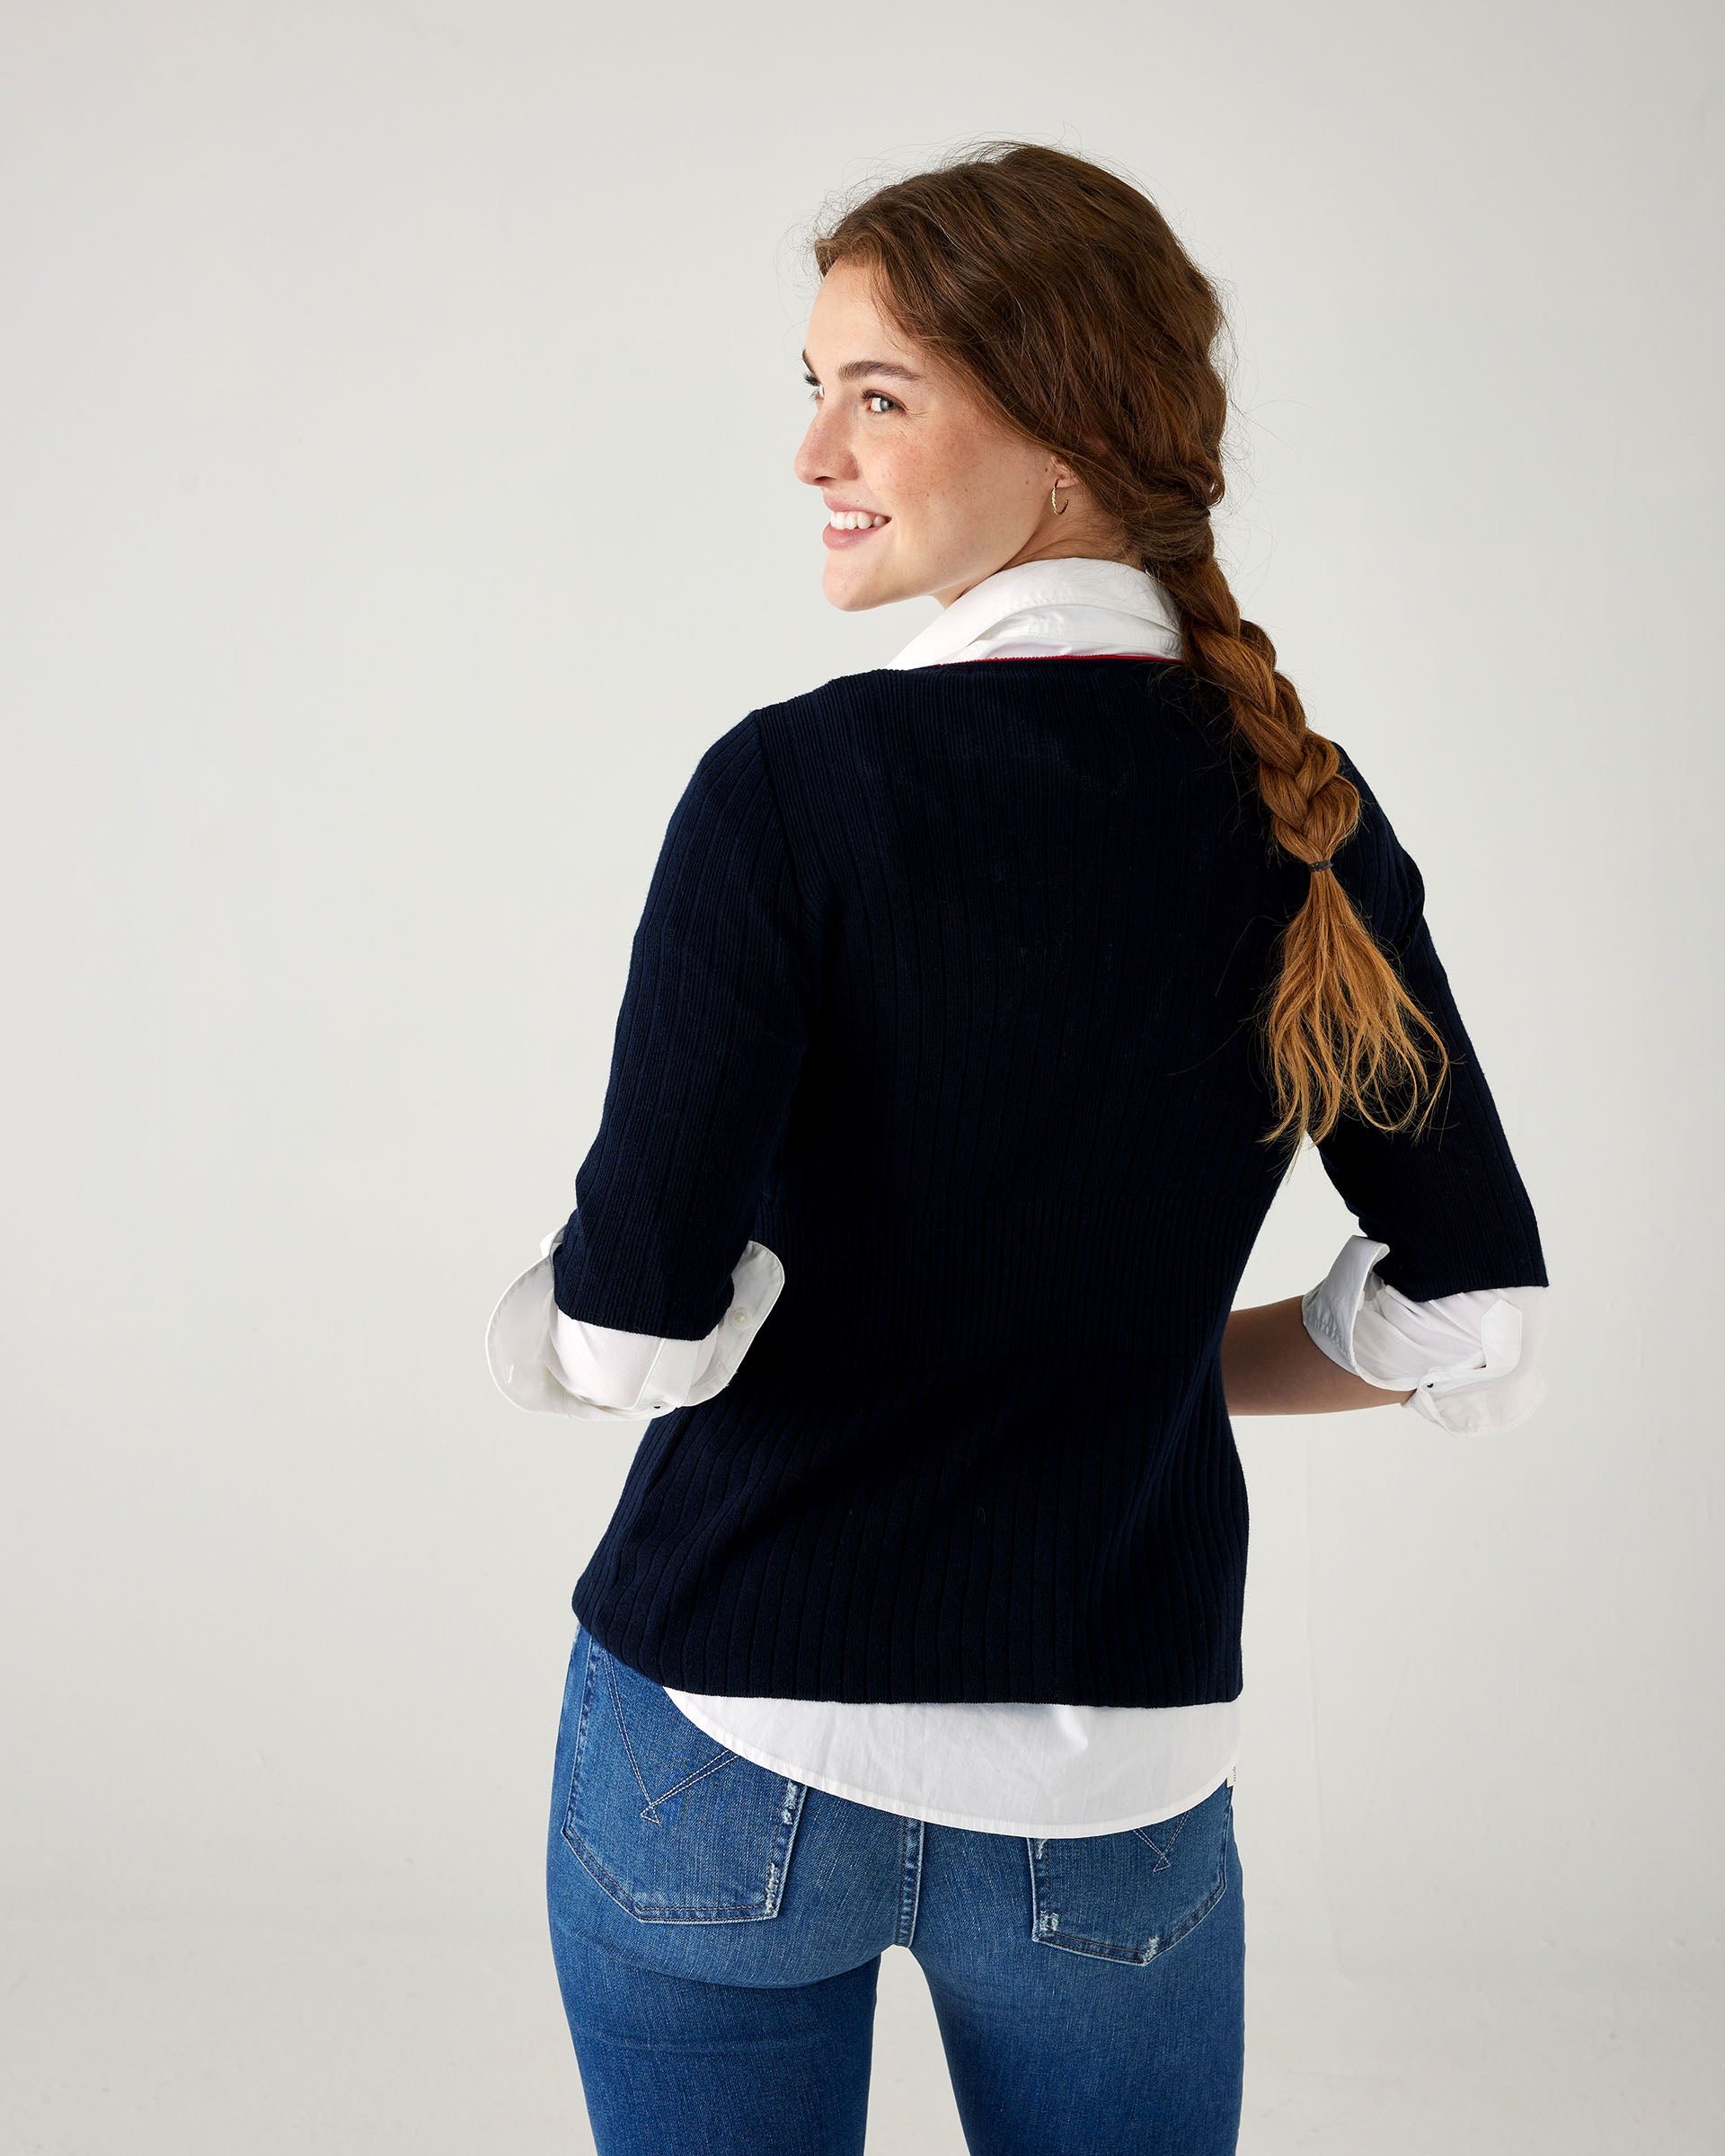 rear view of woman showcasing mersea acton rib knit navy top